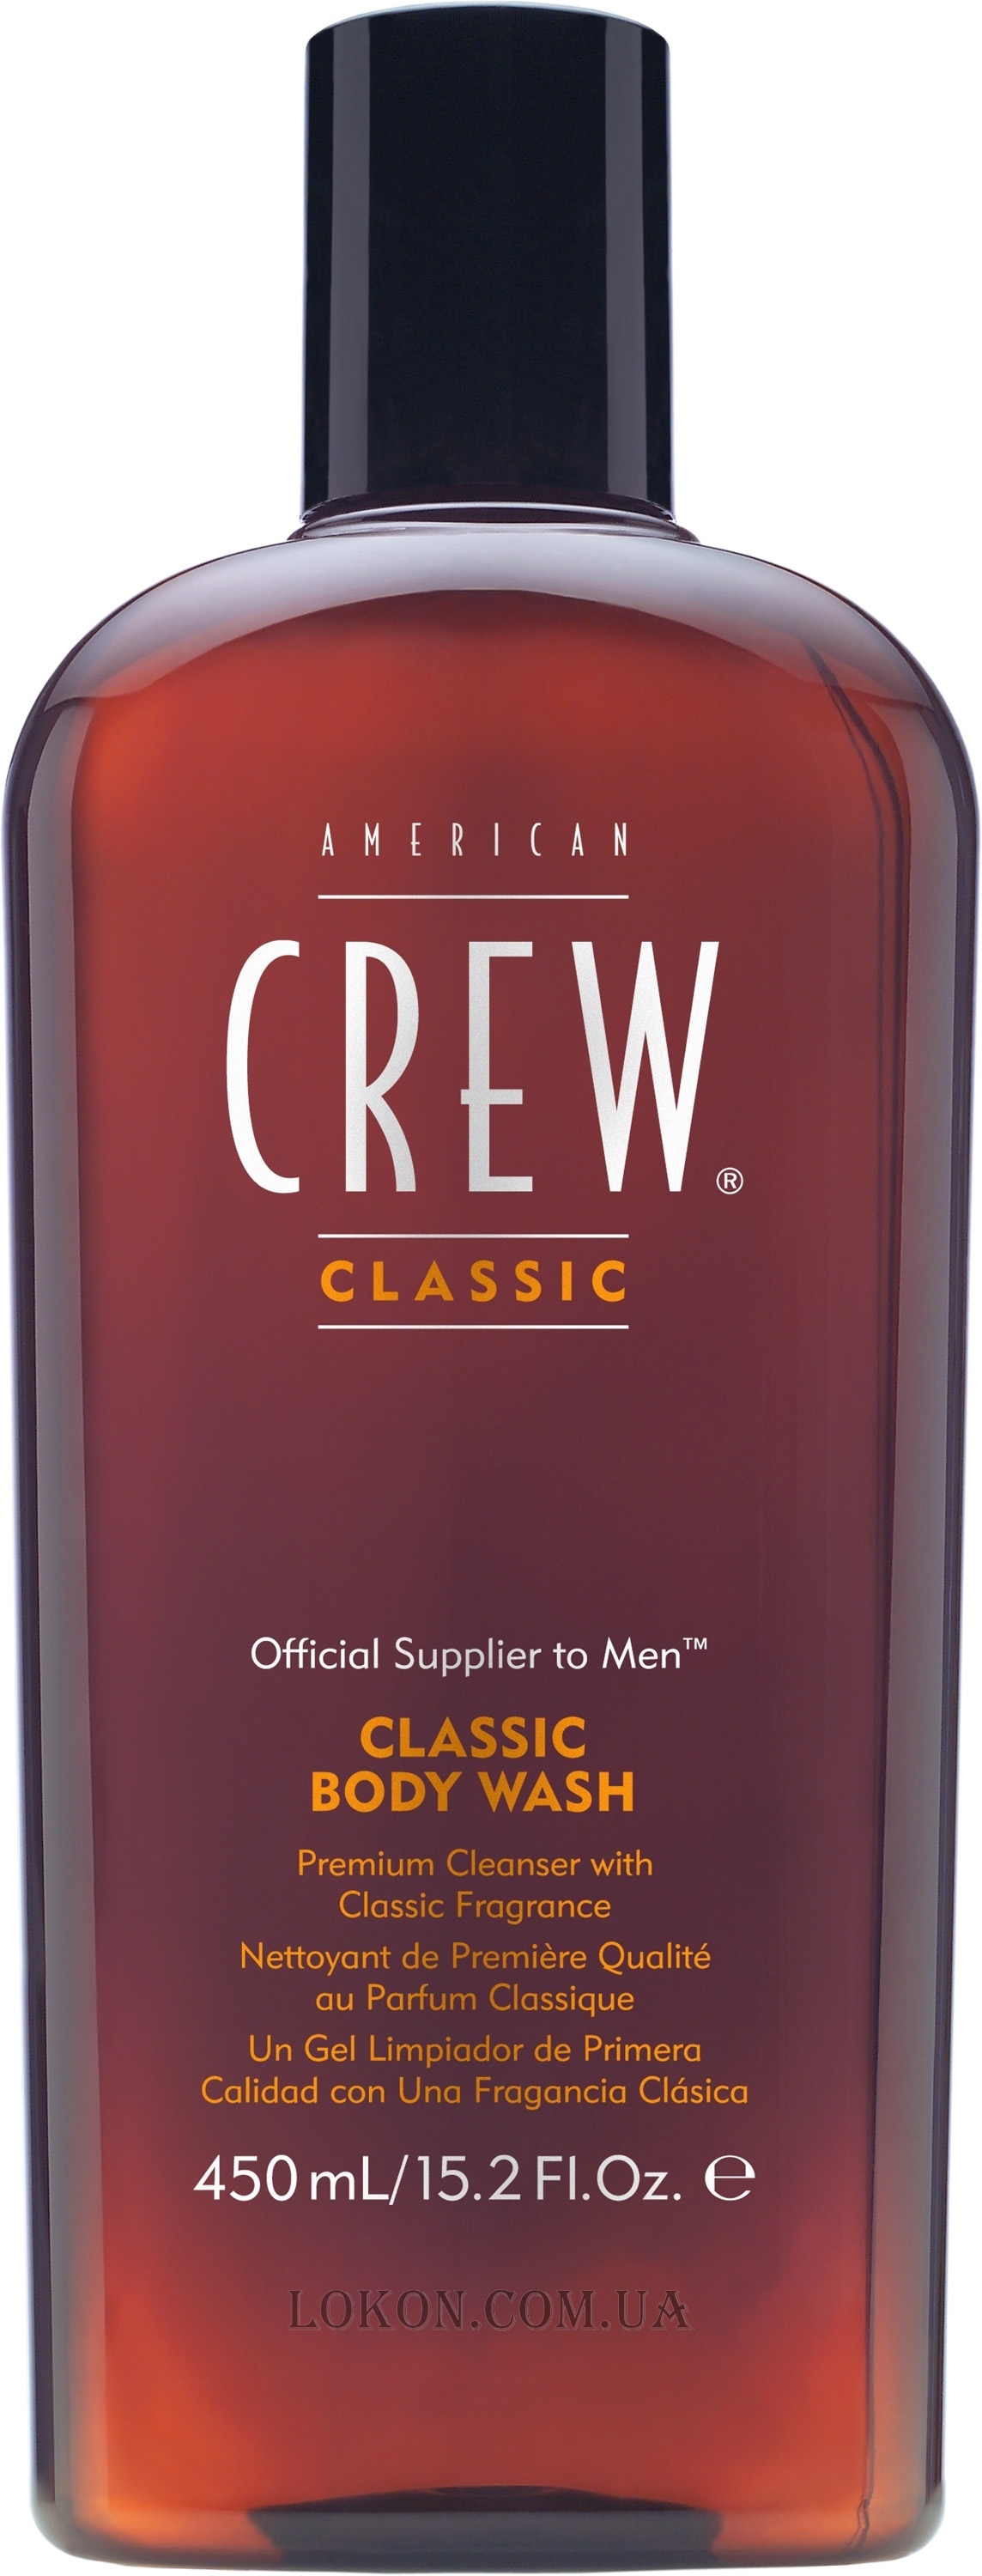 AMERICAN CREW Classic Body Wash - Классический гель для душа